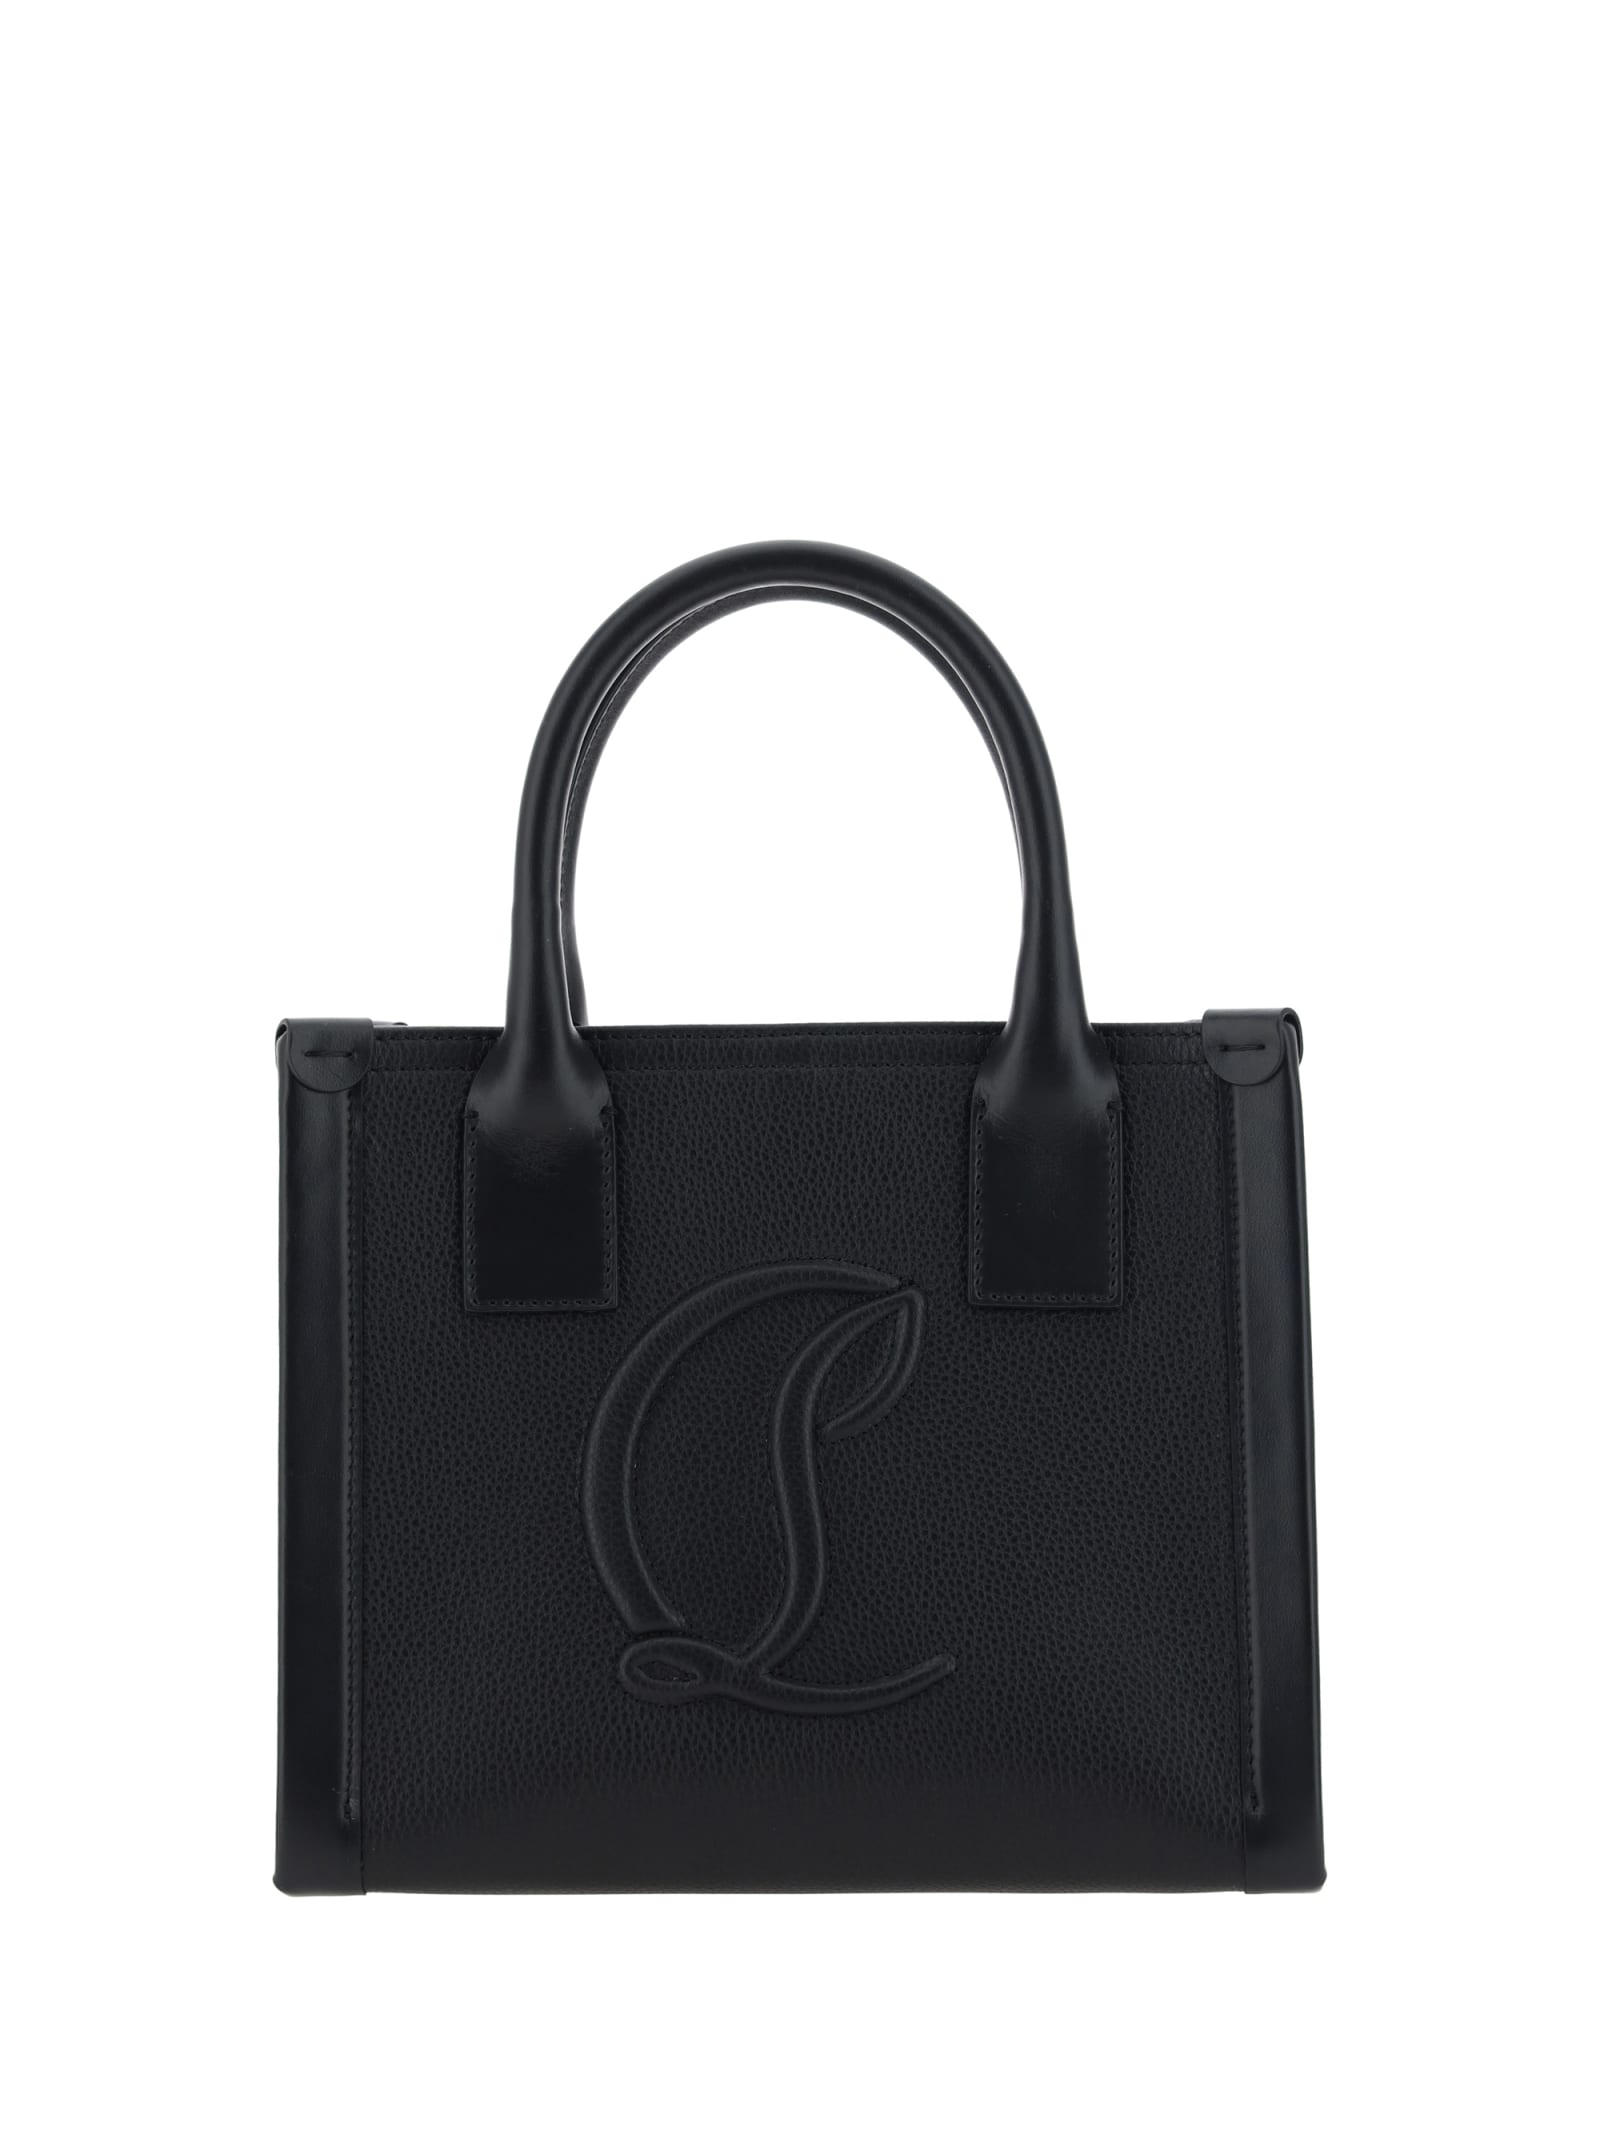 Christian Louboutin By My Side Handbag In 000 Black